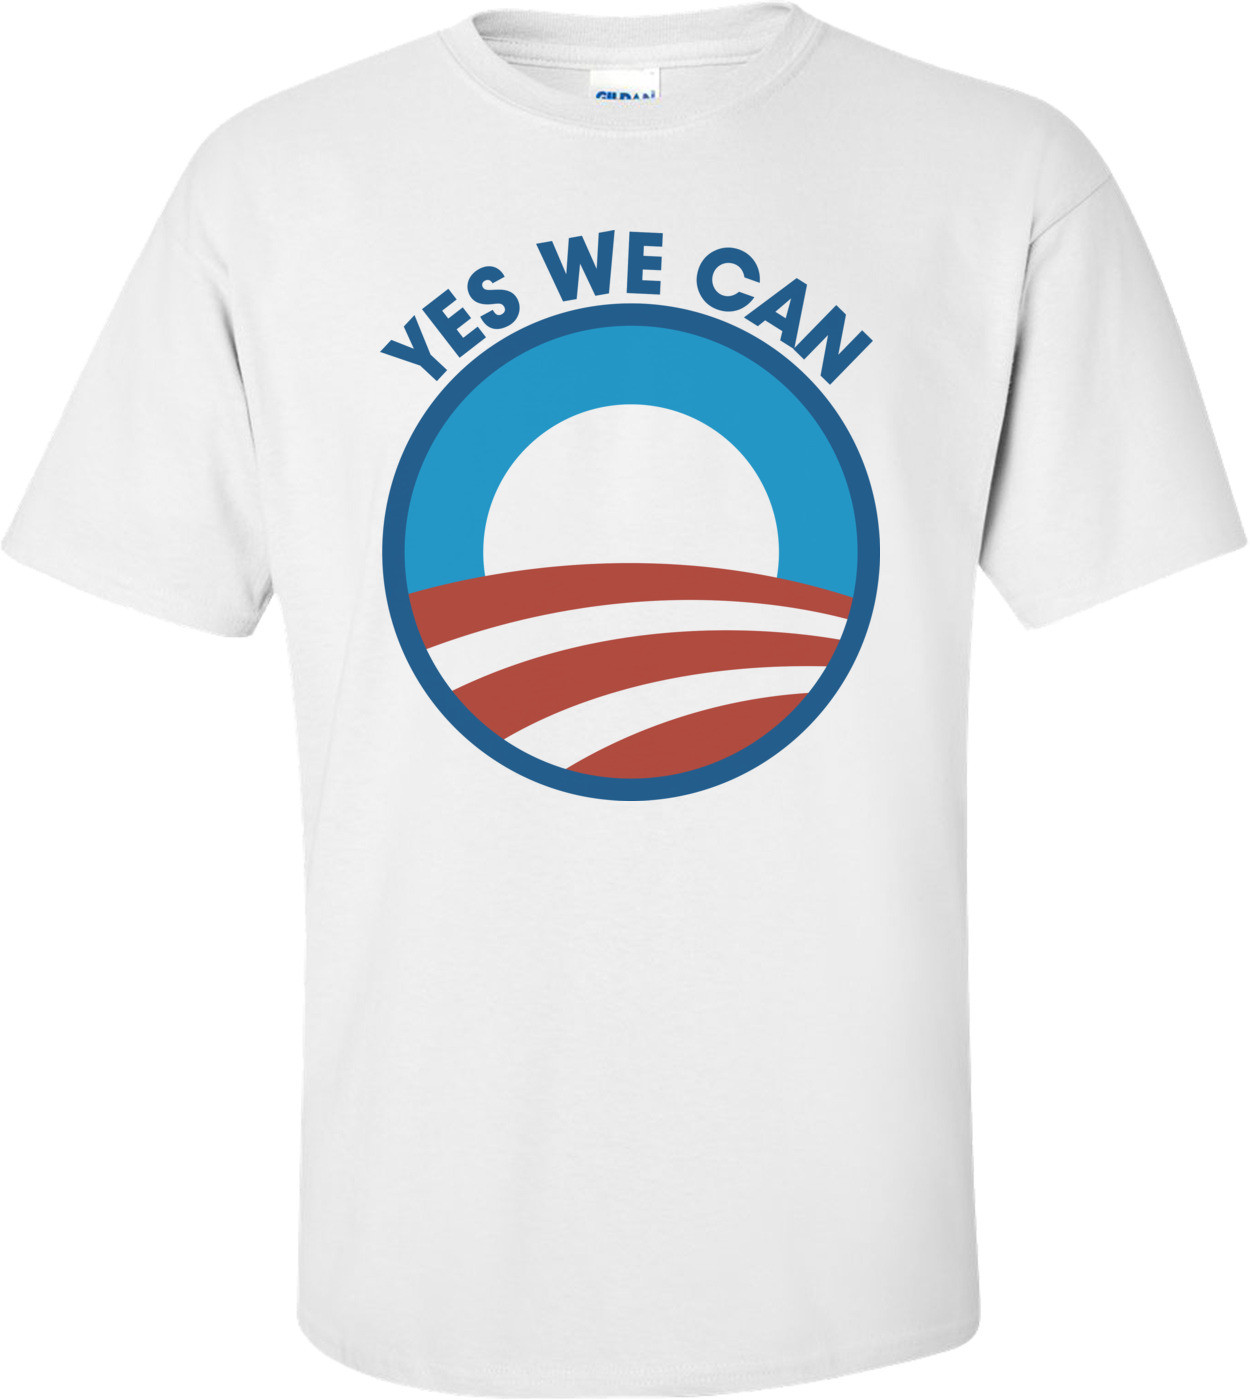 Yes We Can! Barack Obama